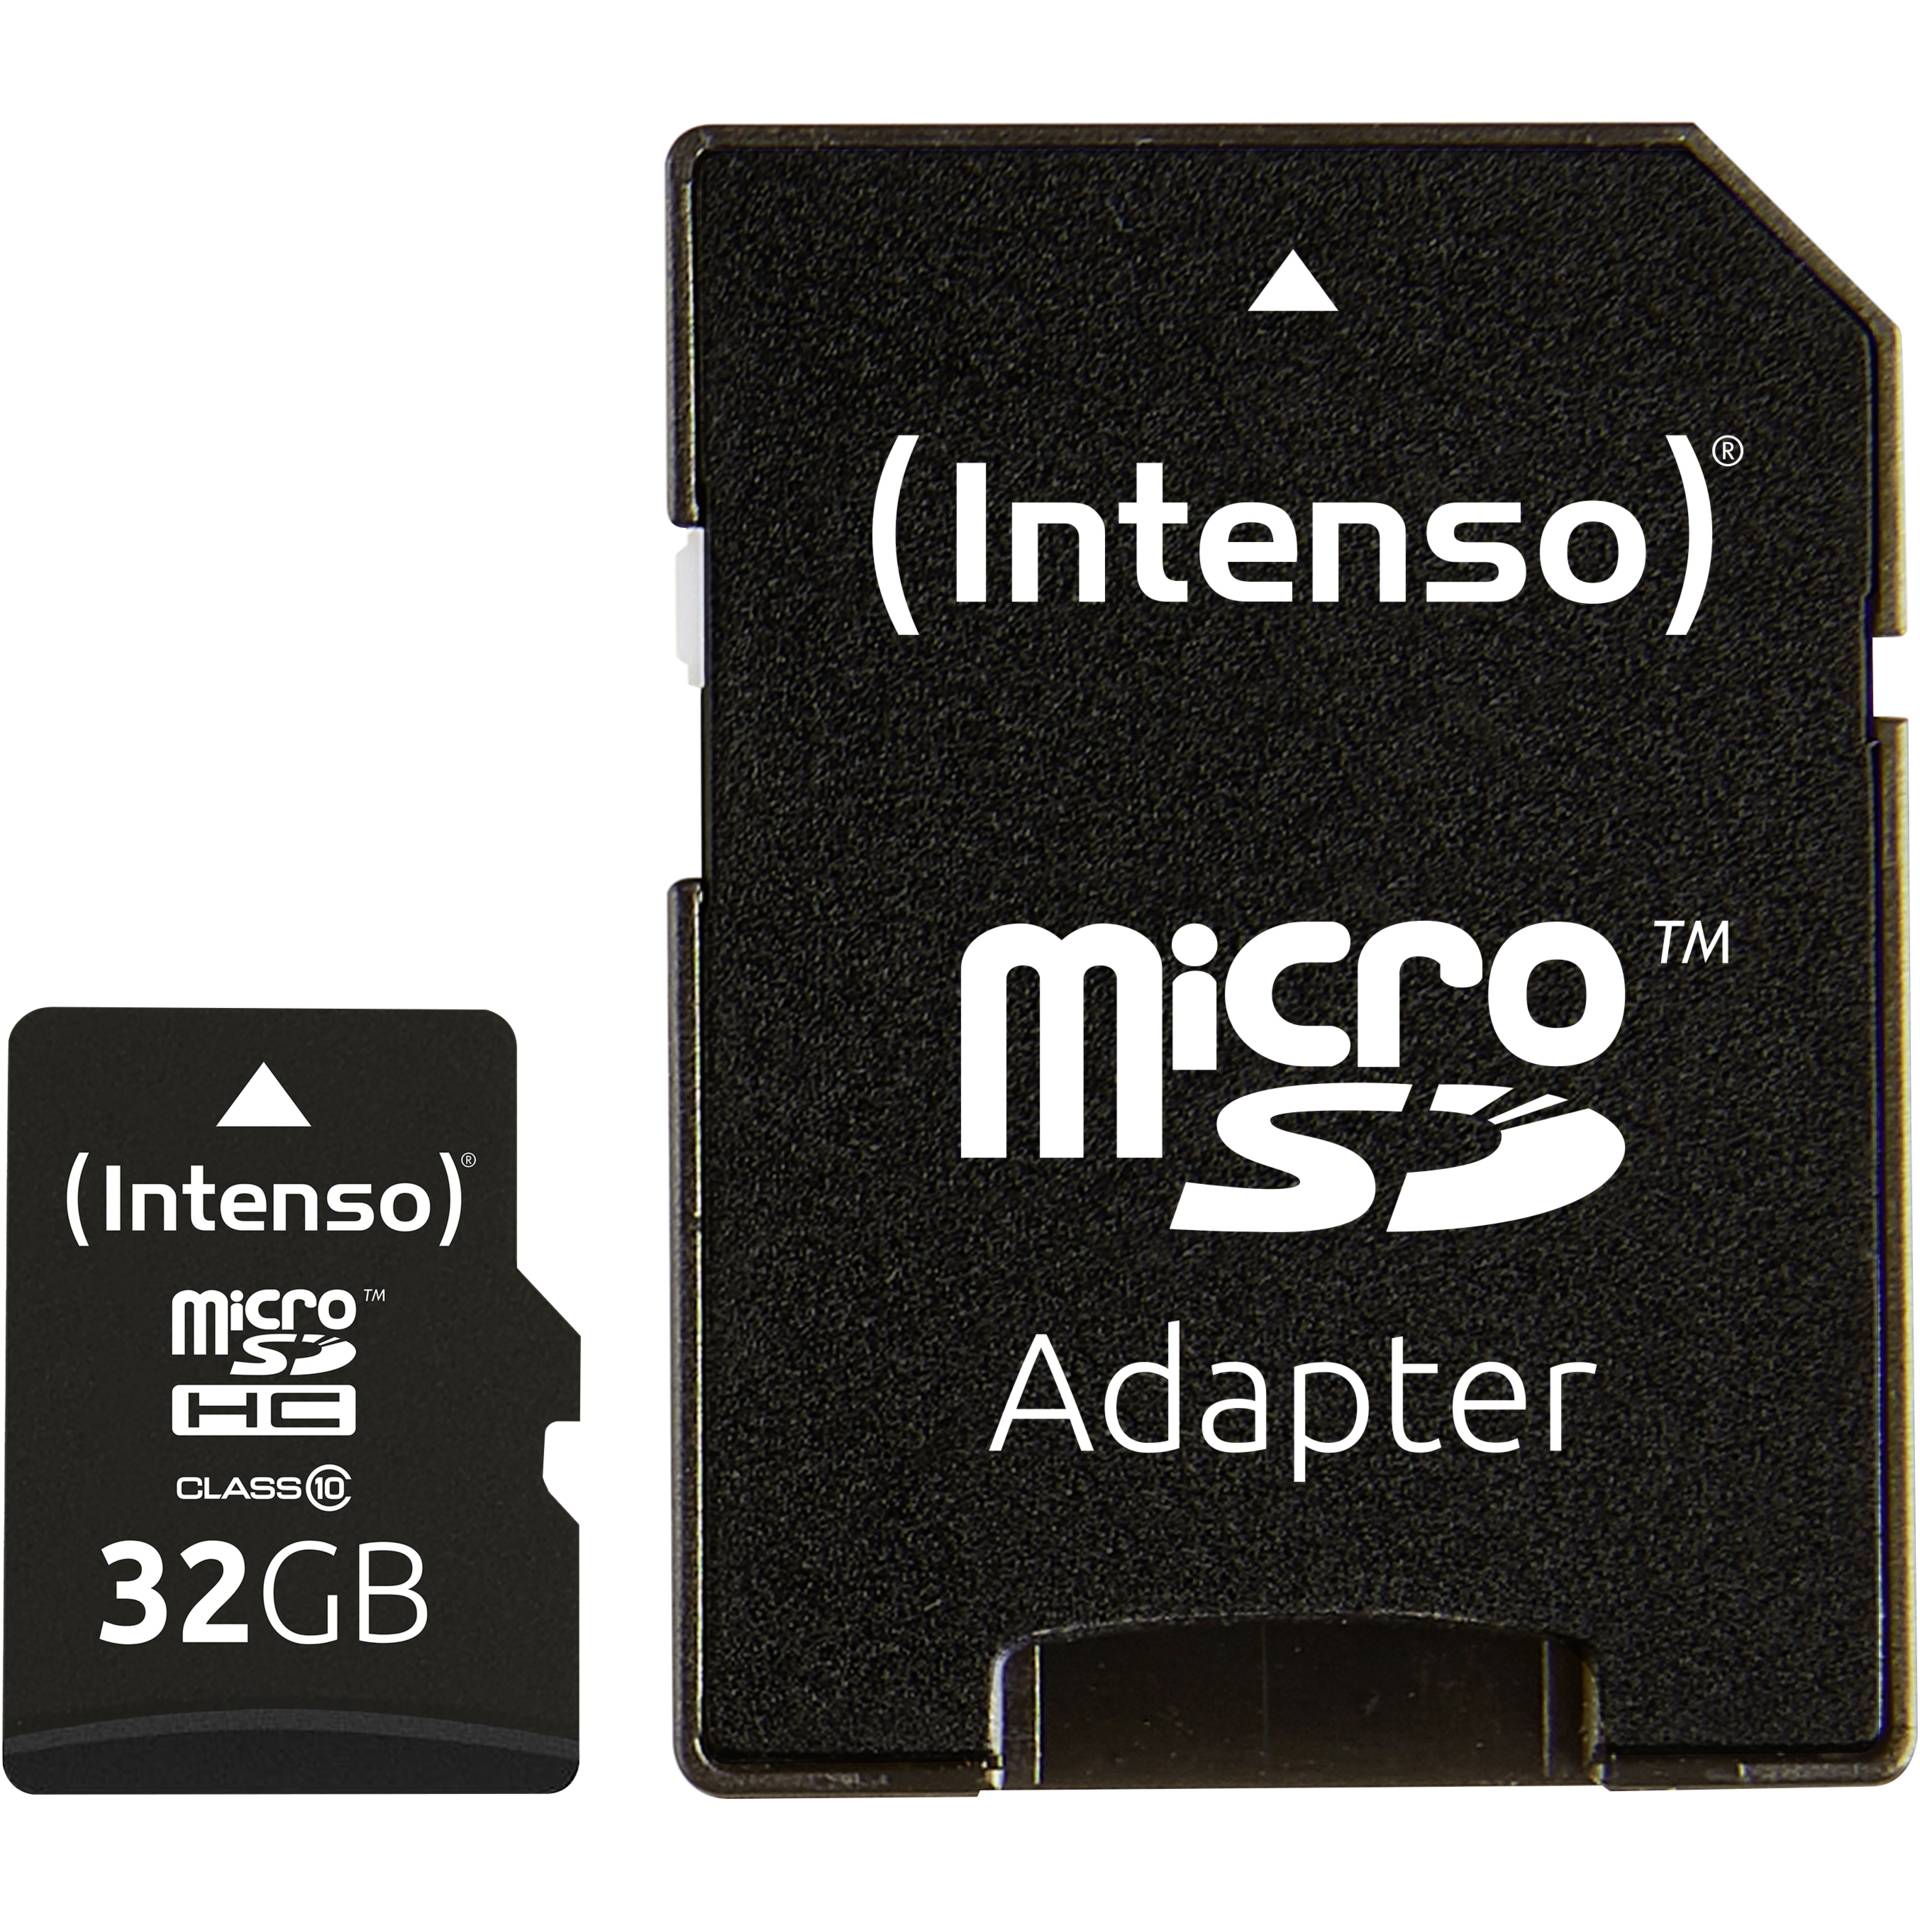 Intenso microSDHC           32GB Class 10